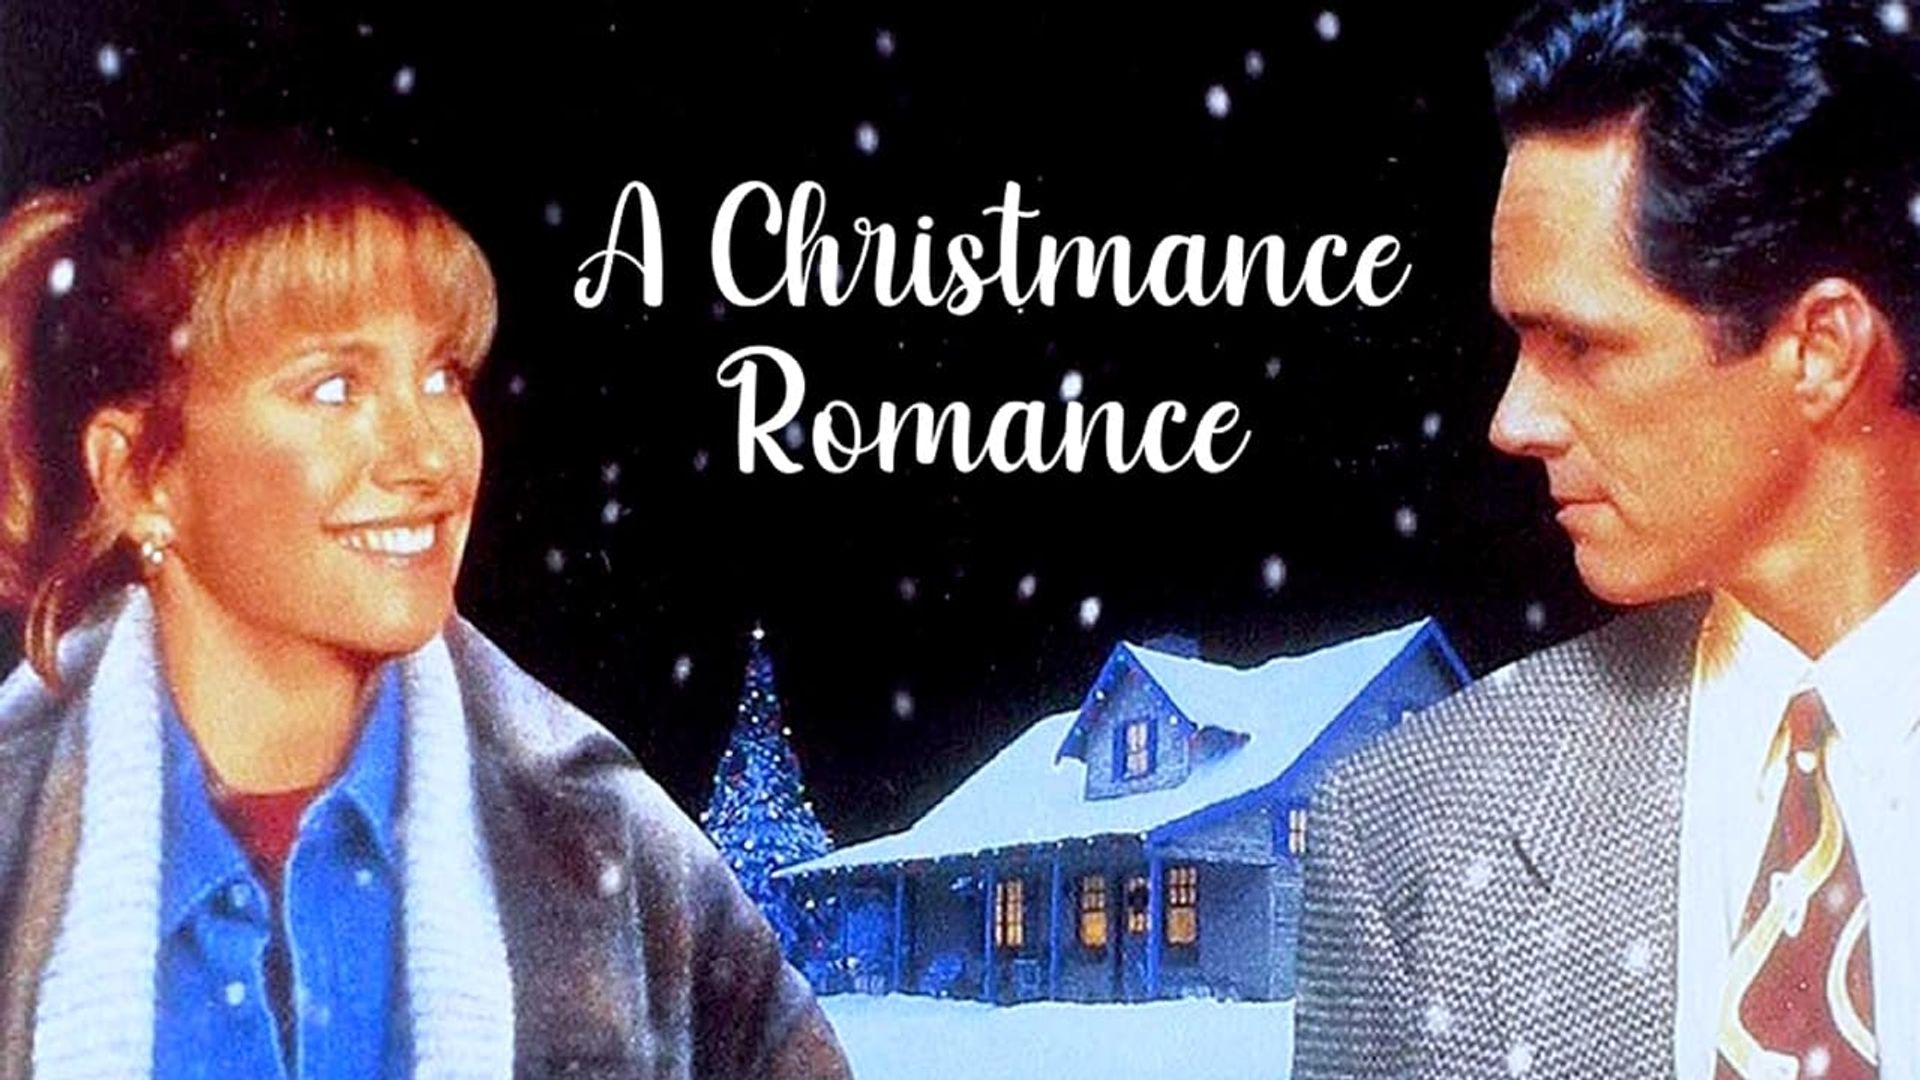 A Christmas Romance background